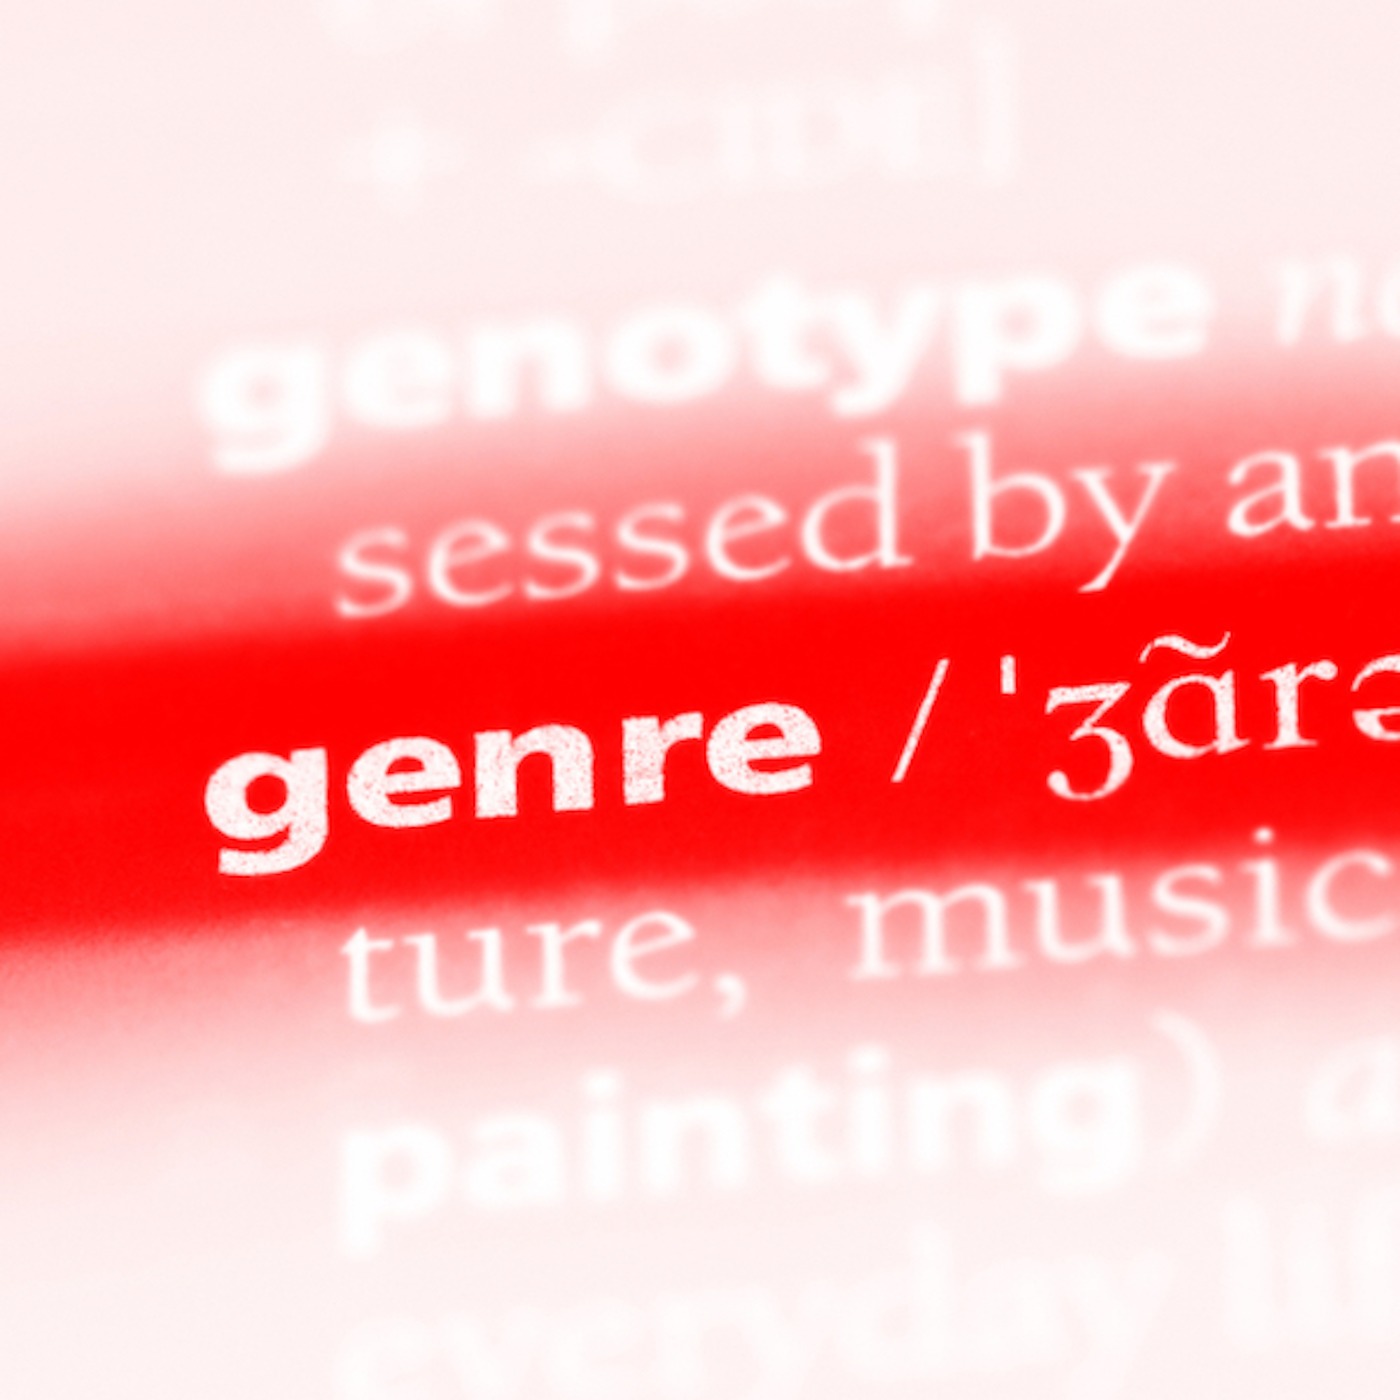 Genre, format, and purpose